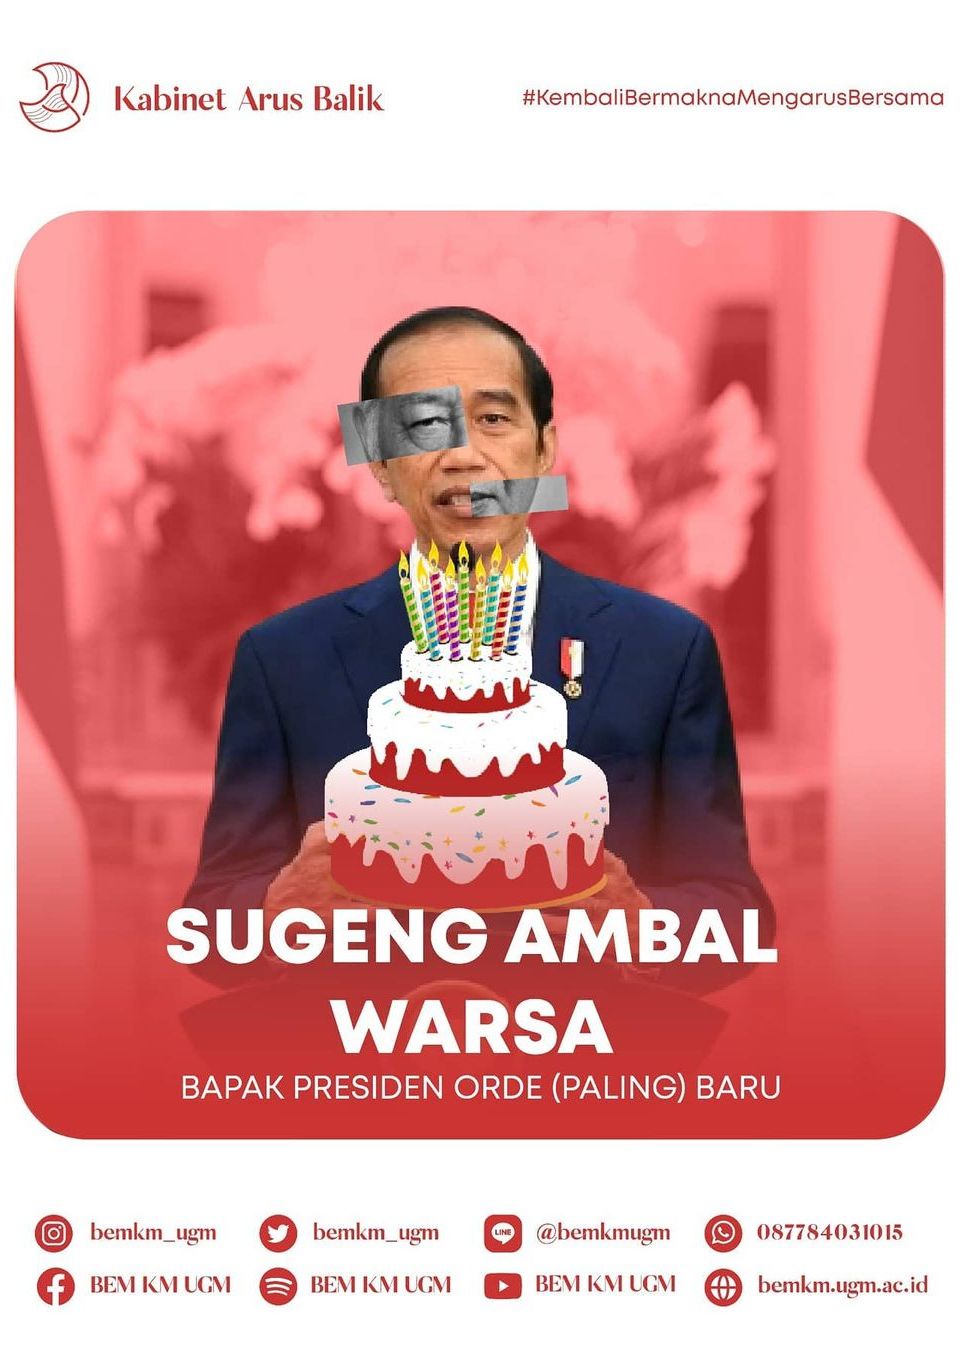 Unggahan Selamat Ultah untuk Jokowi